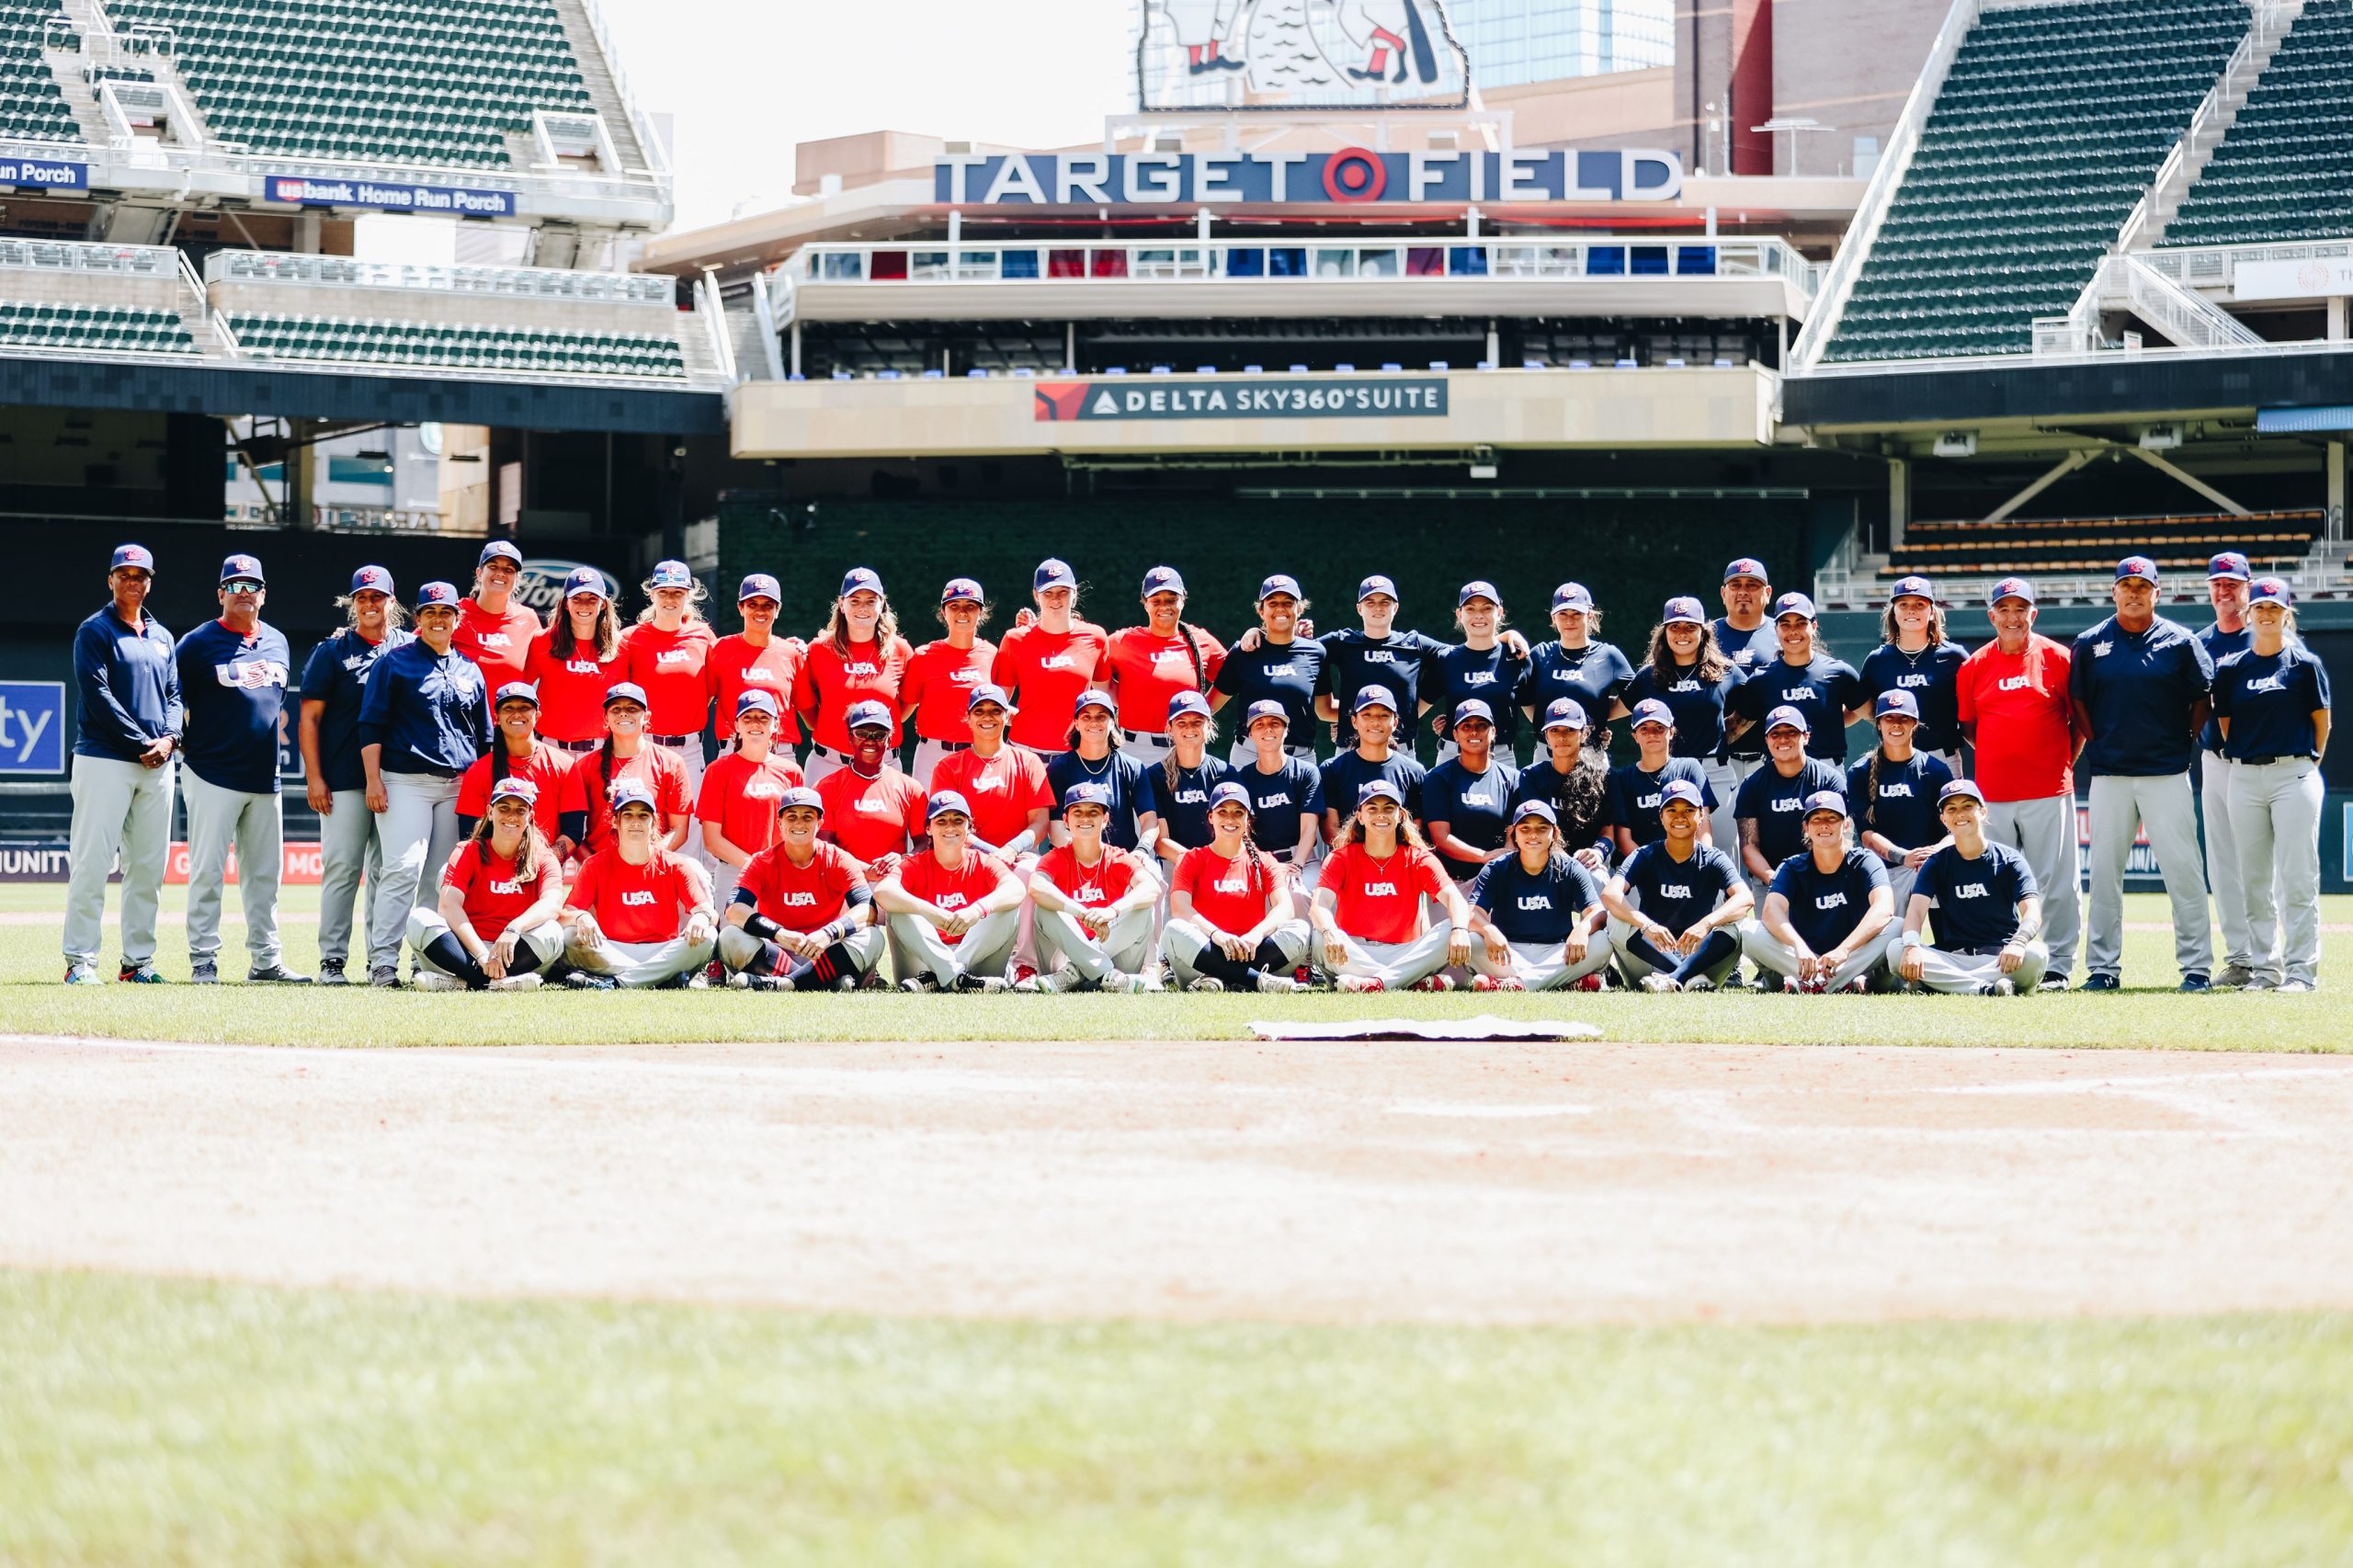 A team photo of the USA women's baseball team.